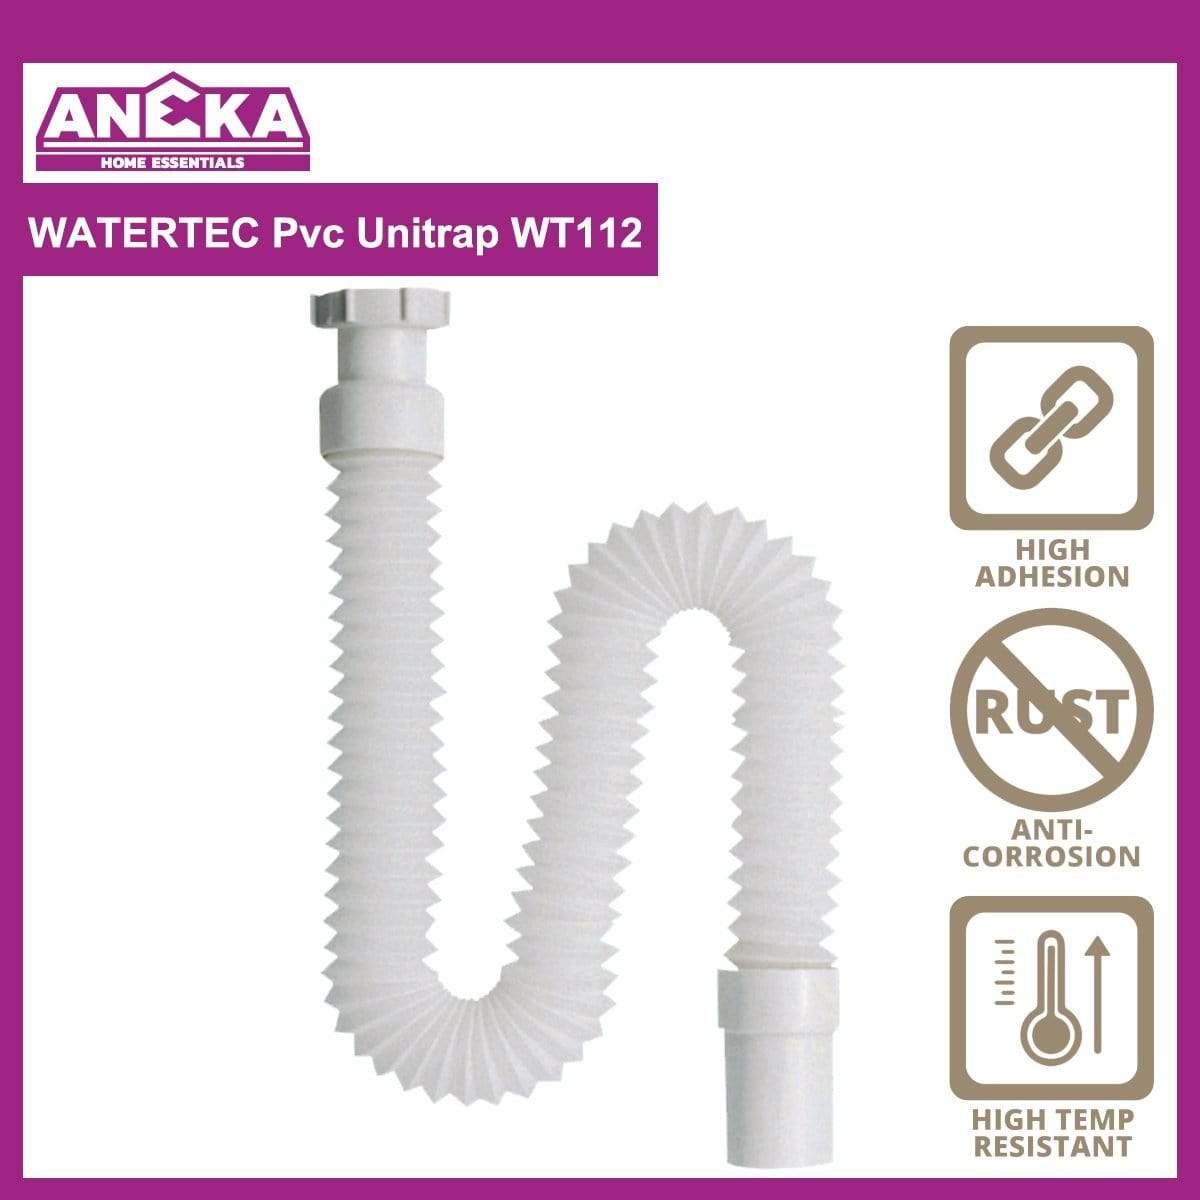 WATERTEC Pvc Unitrap WT112